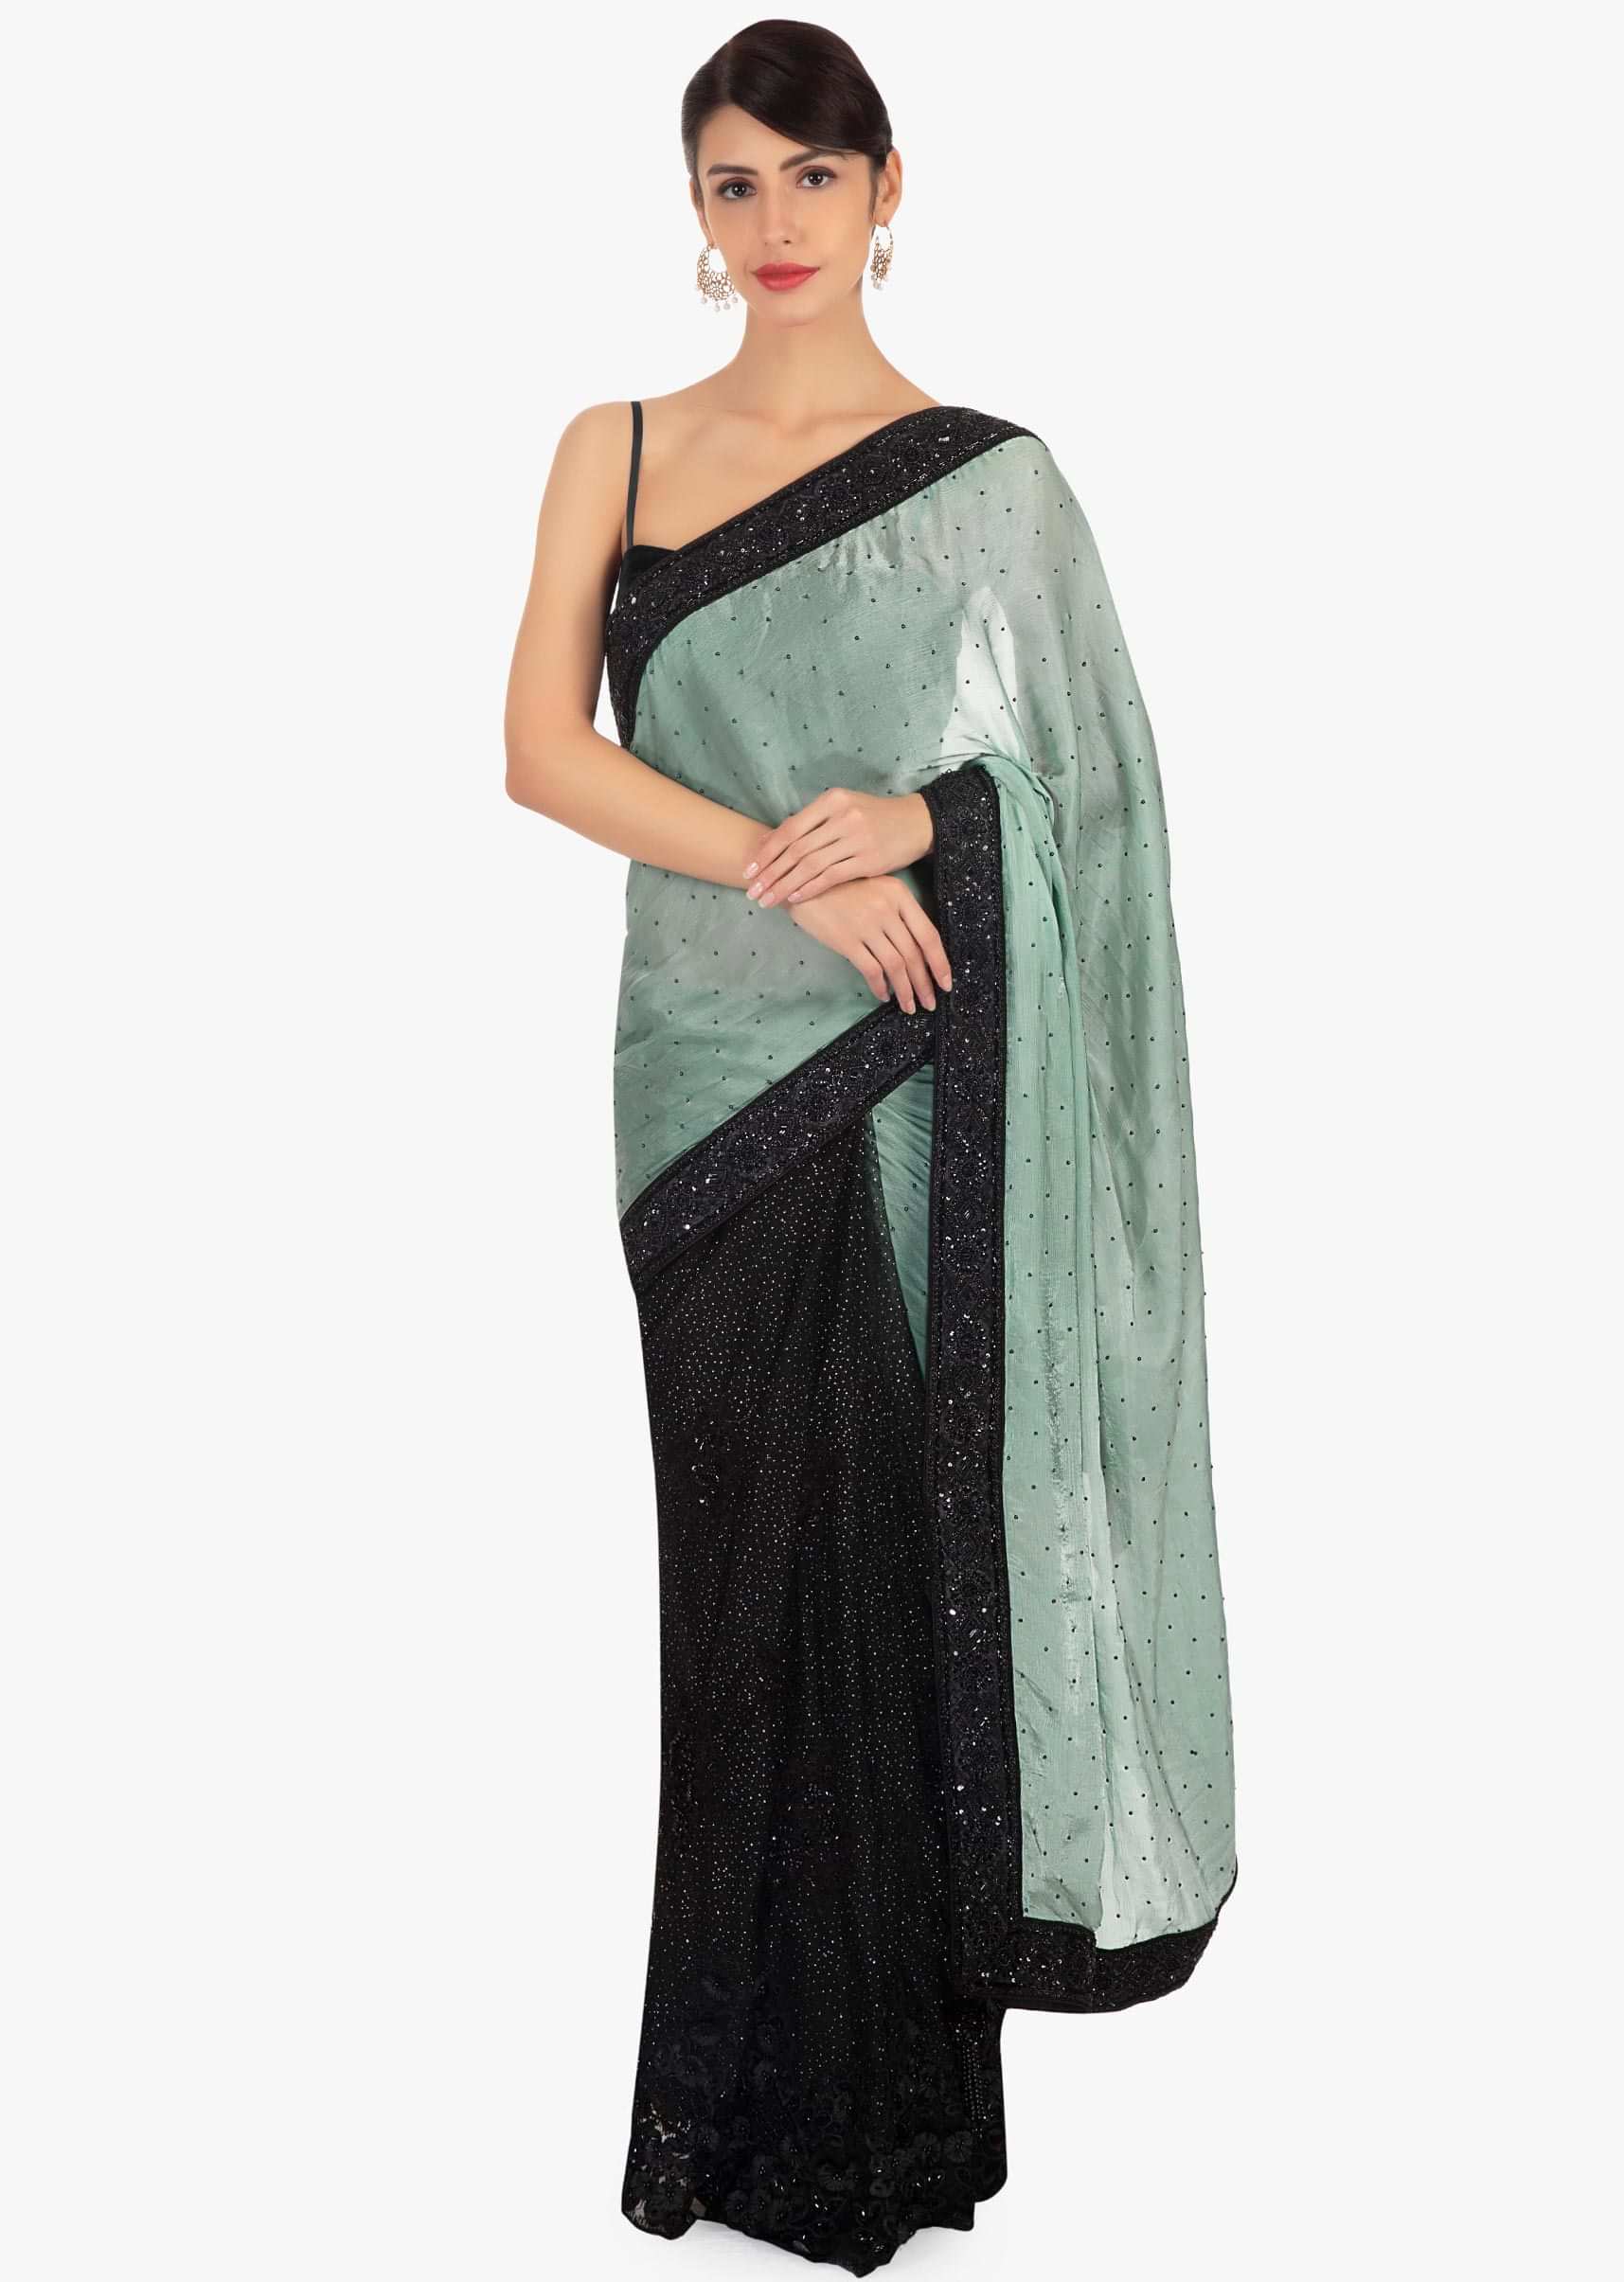 Black and green half and half saree in net and chiffon satin